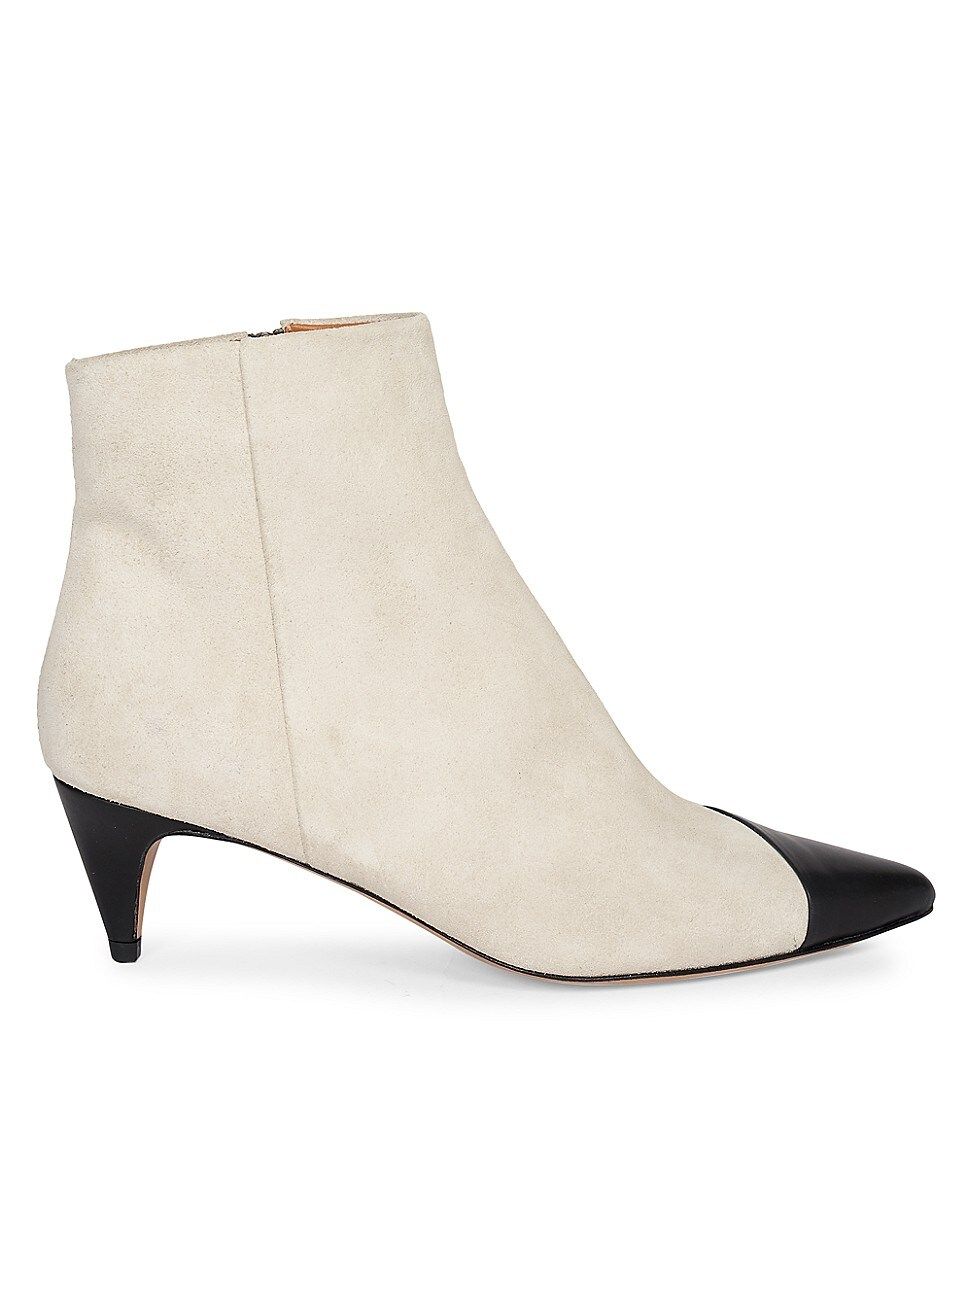 Isabel Marant Women's Dlade Bi-Color Leather & Suede Ankle Boots - Black Chalk - Size 6 | Saks Fifth Avenue